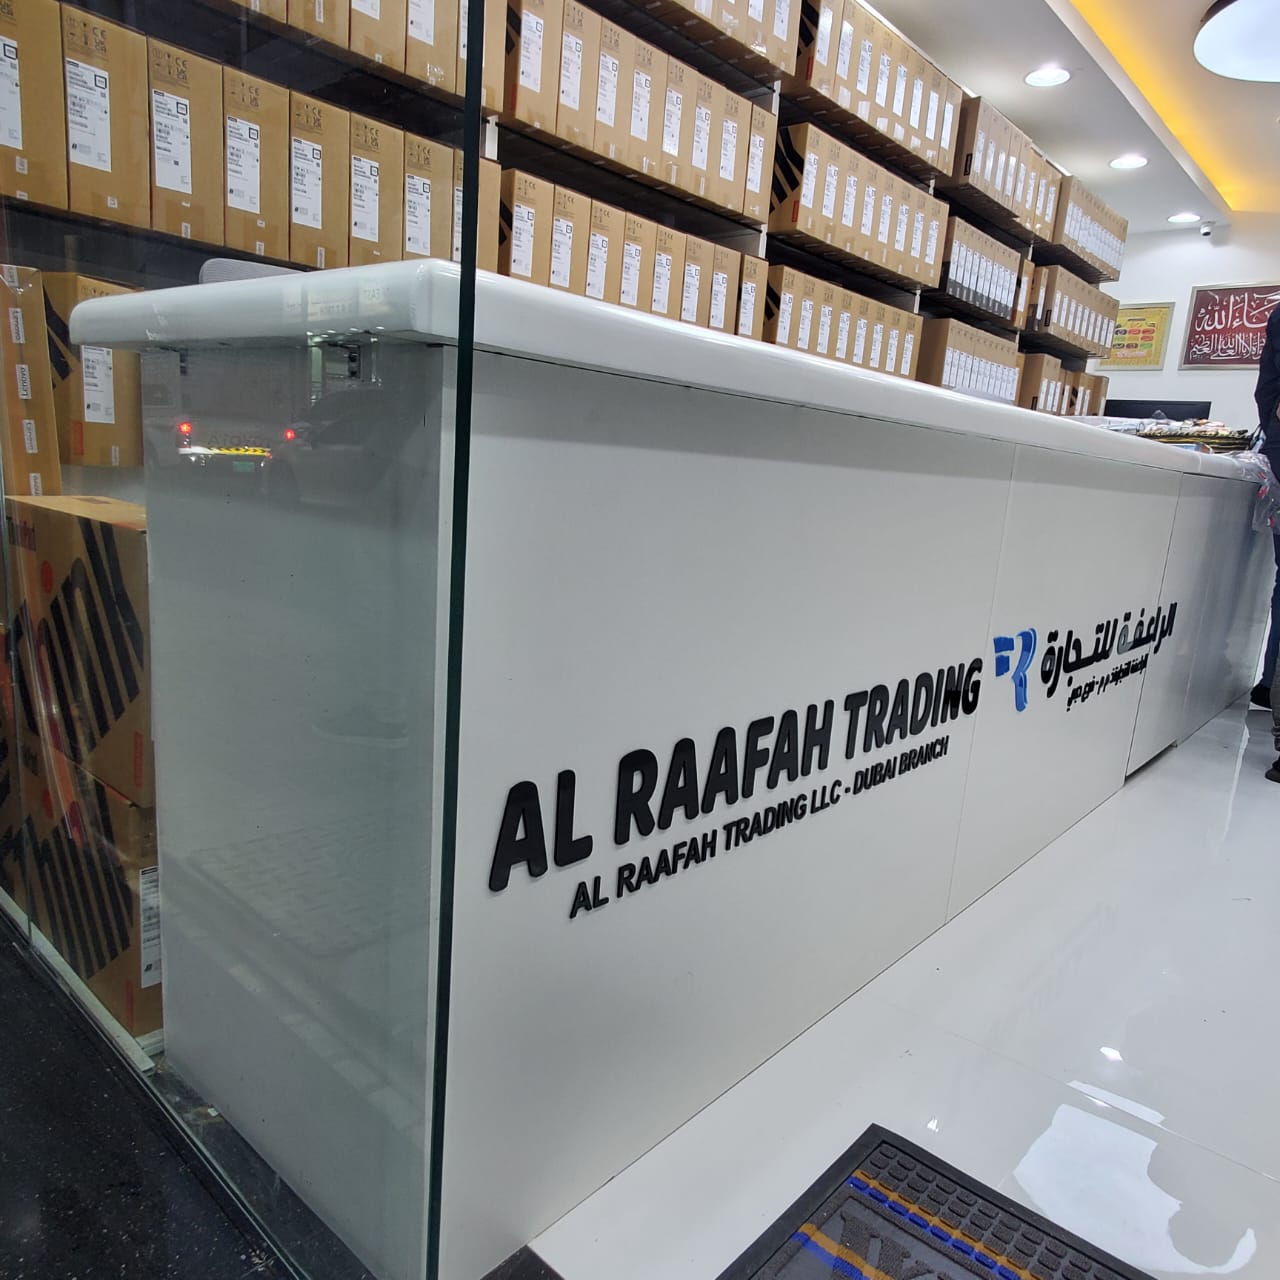 Al Raafah Trading